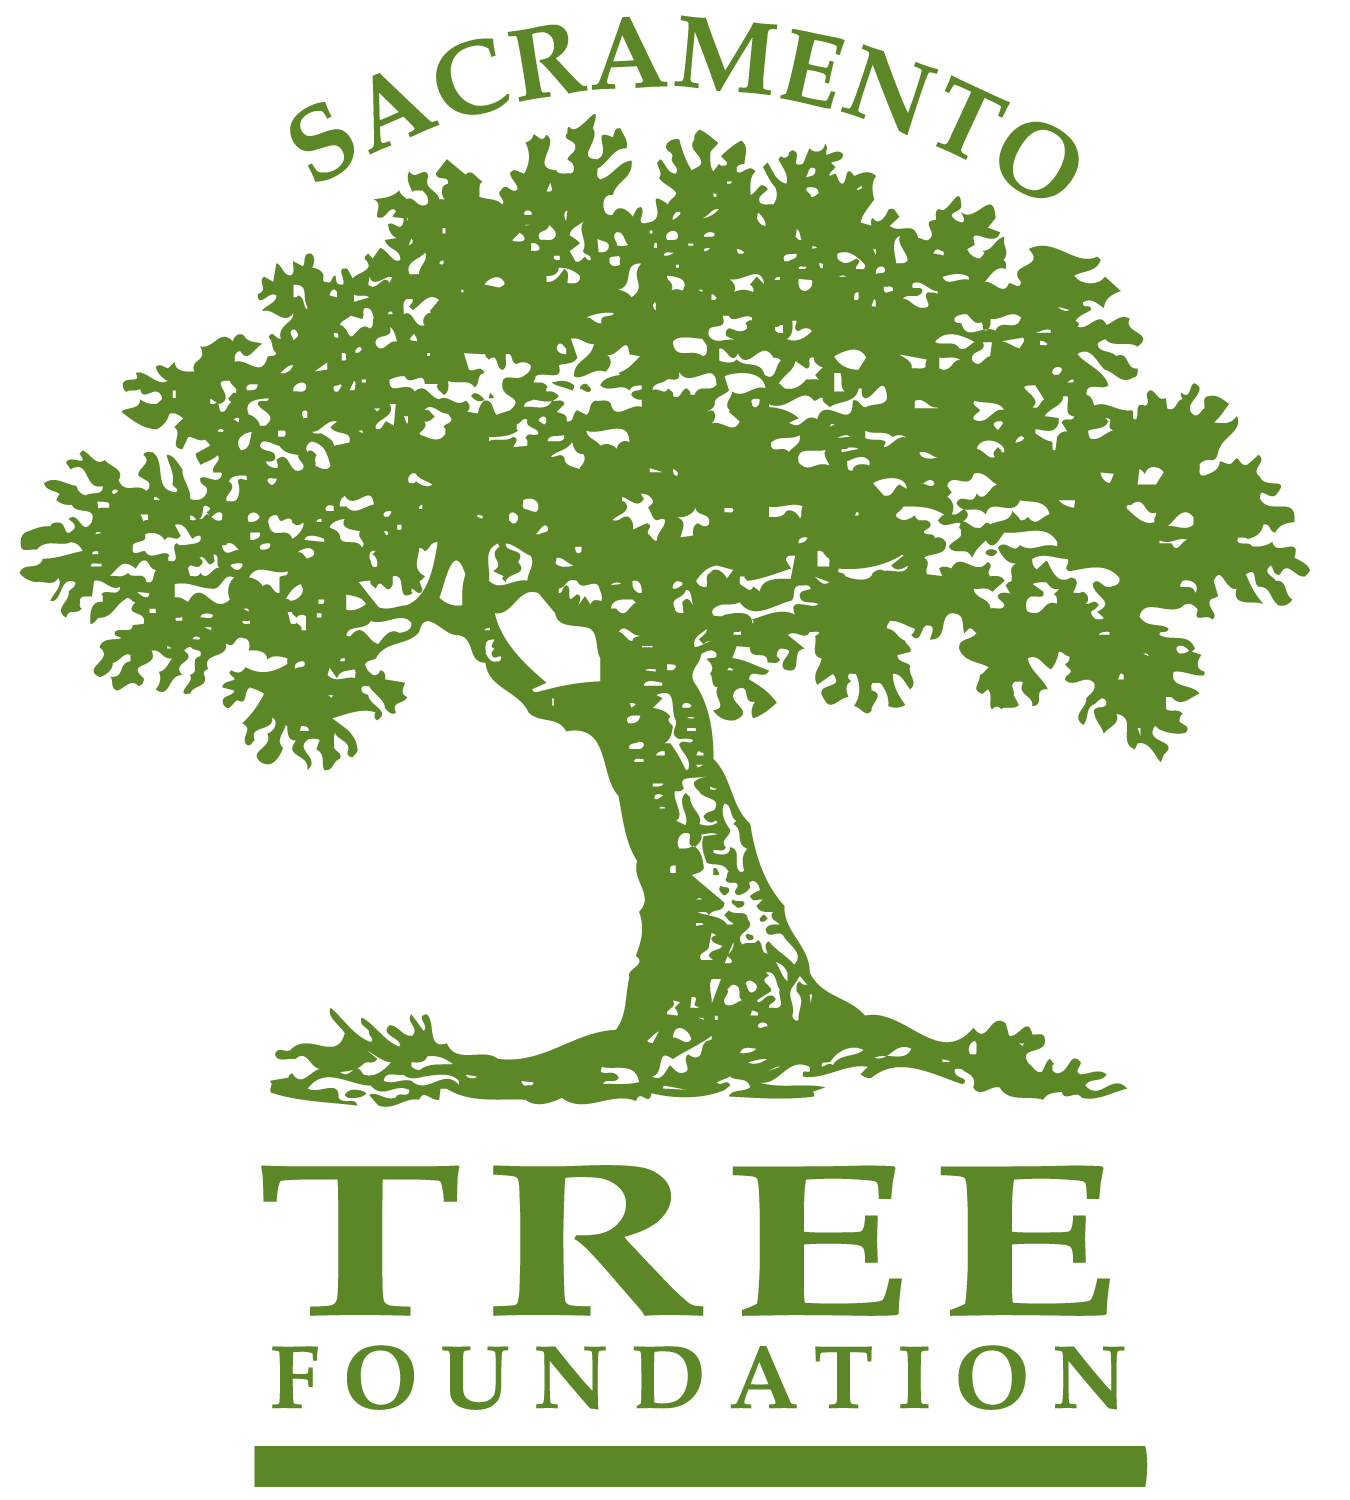 Sacramento Tree Foundation Logo featuring a large green tree